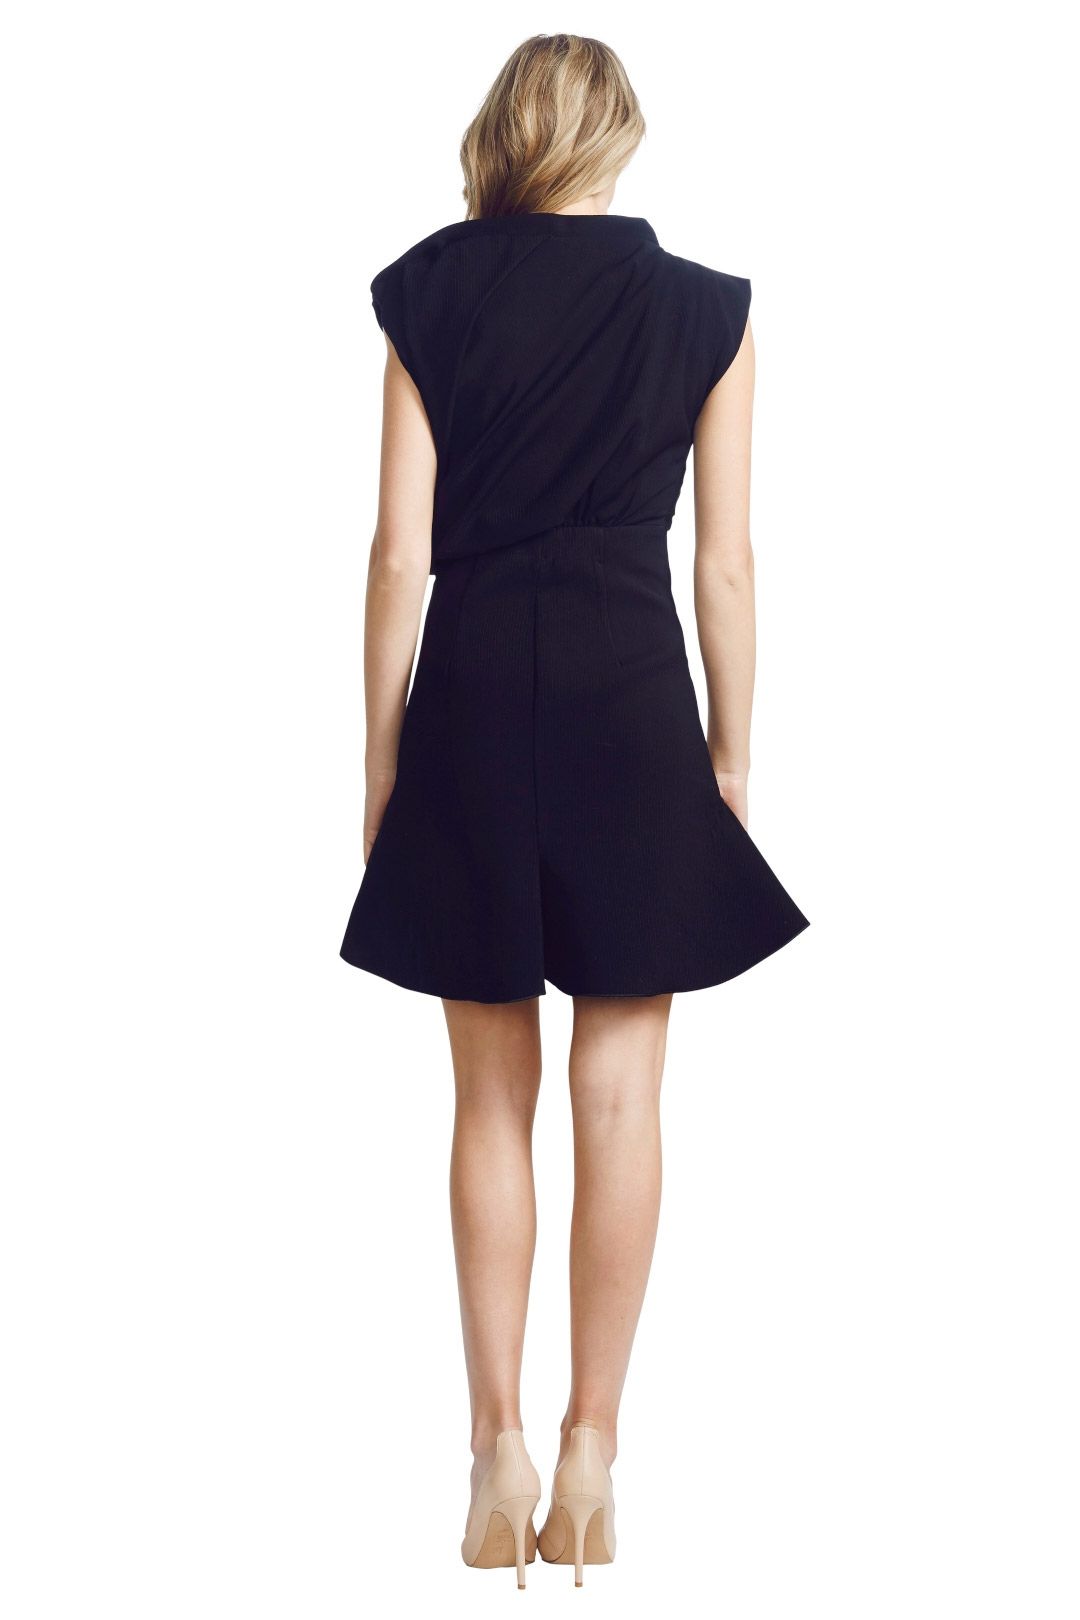 Ellery - Bonsai Ruched Dress - Black - Back